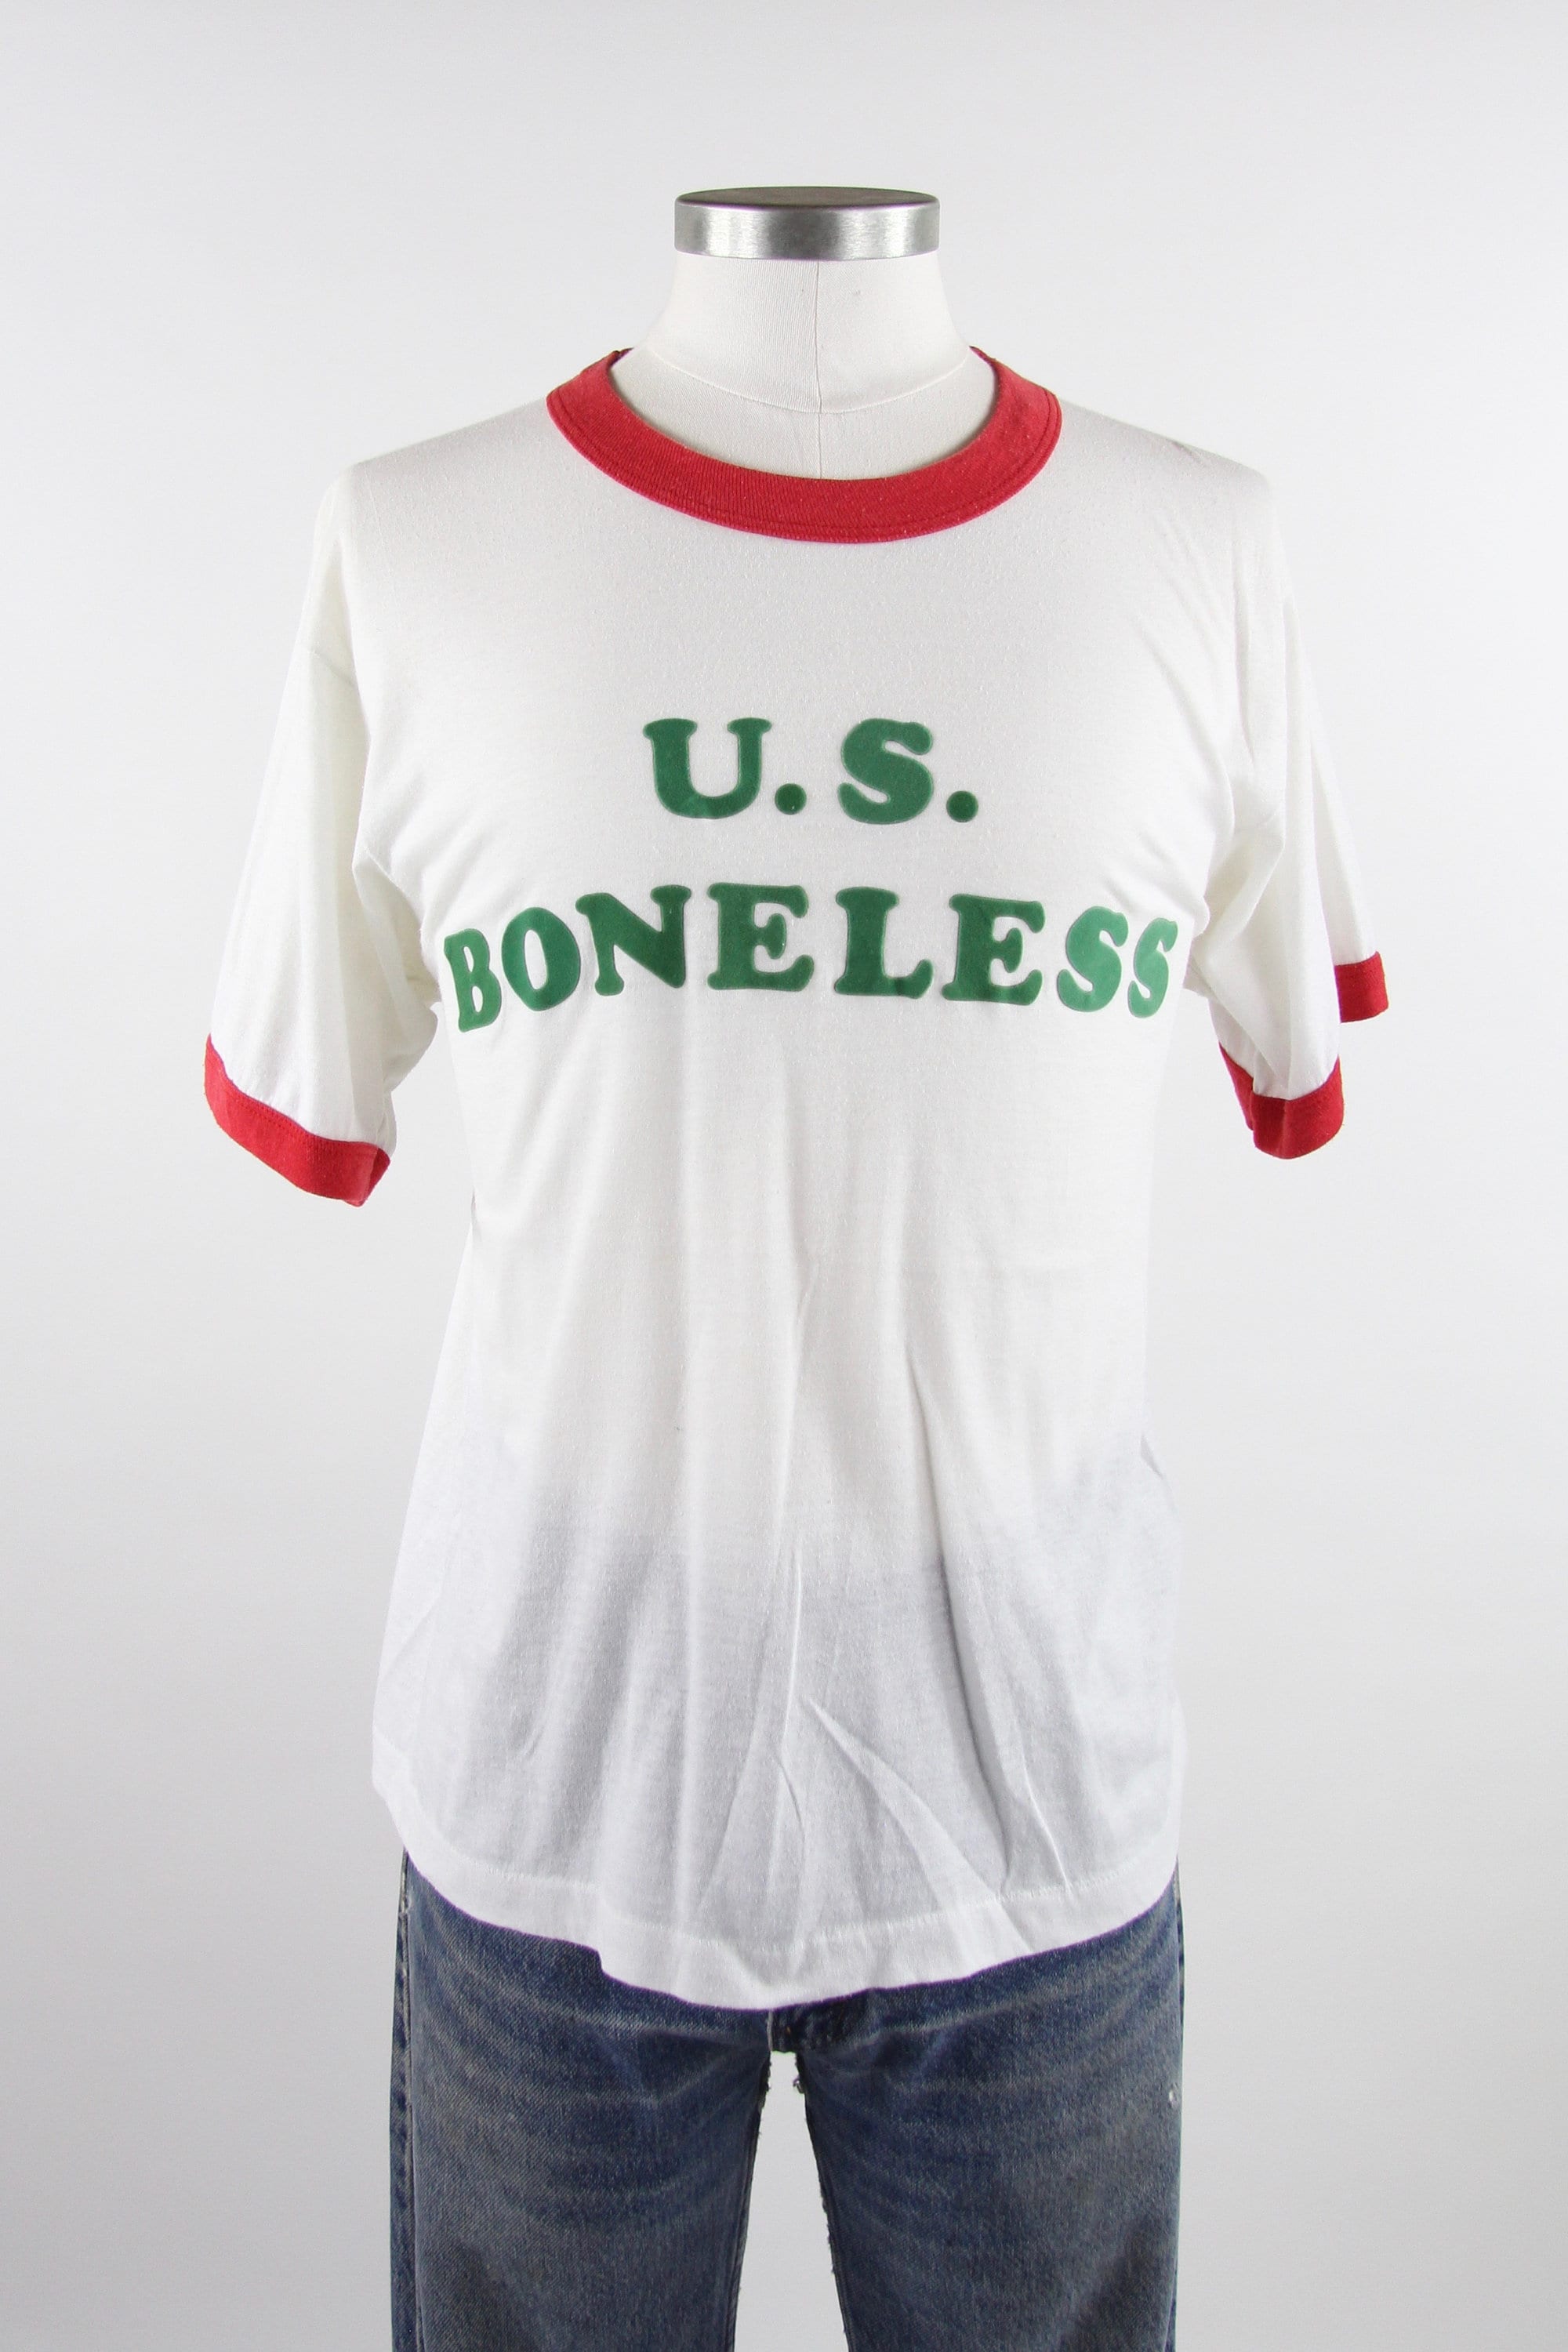 Vintage 70s Ringer T Shirt Us Boneless Felt Iron On Tee Shirt Mens Size Medium 